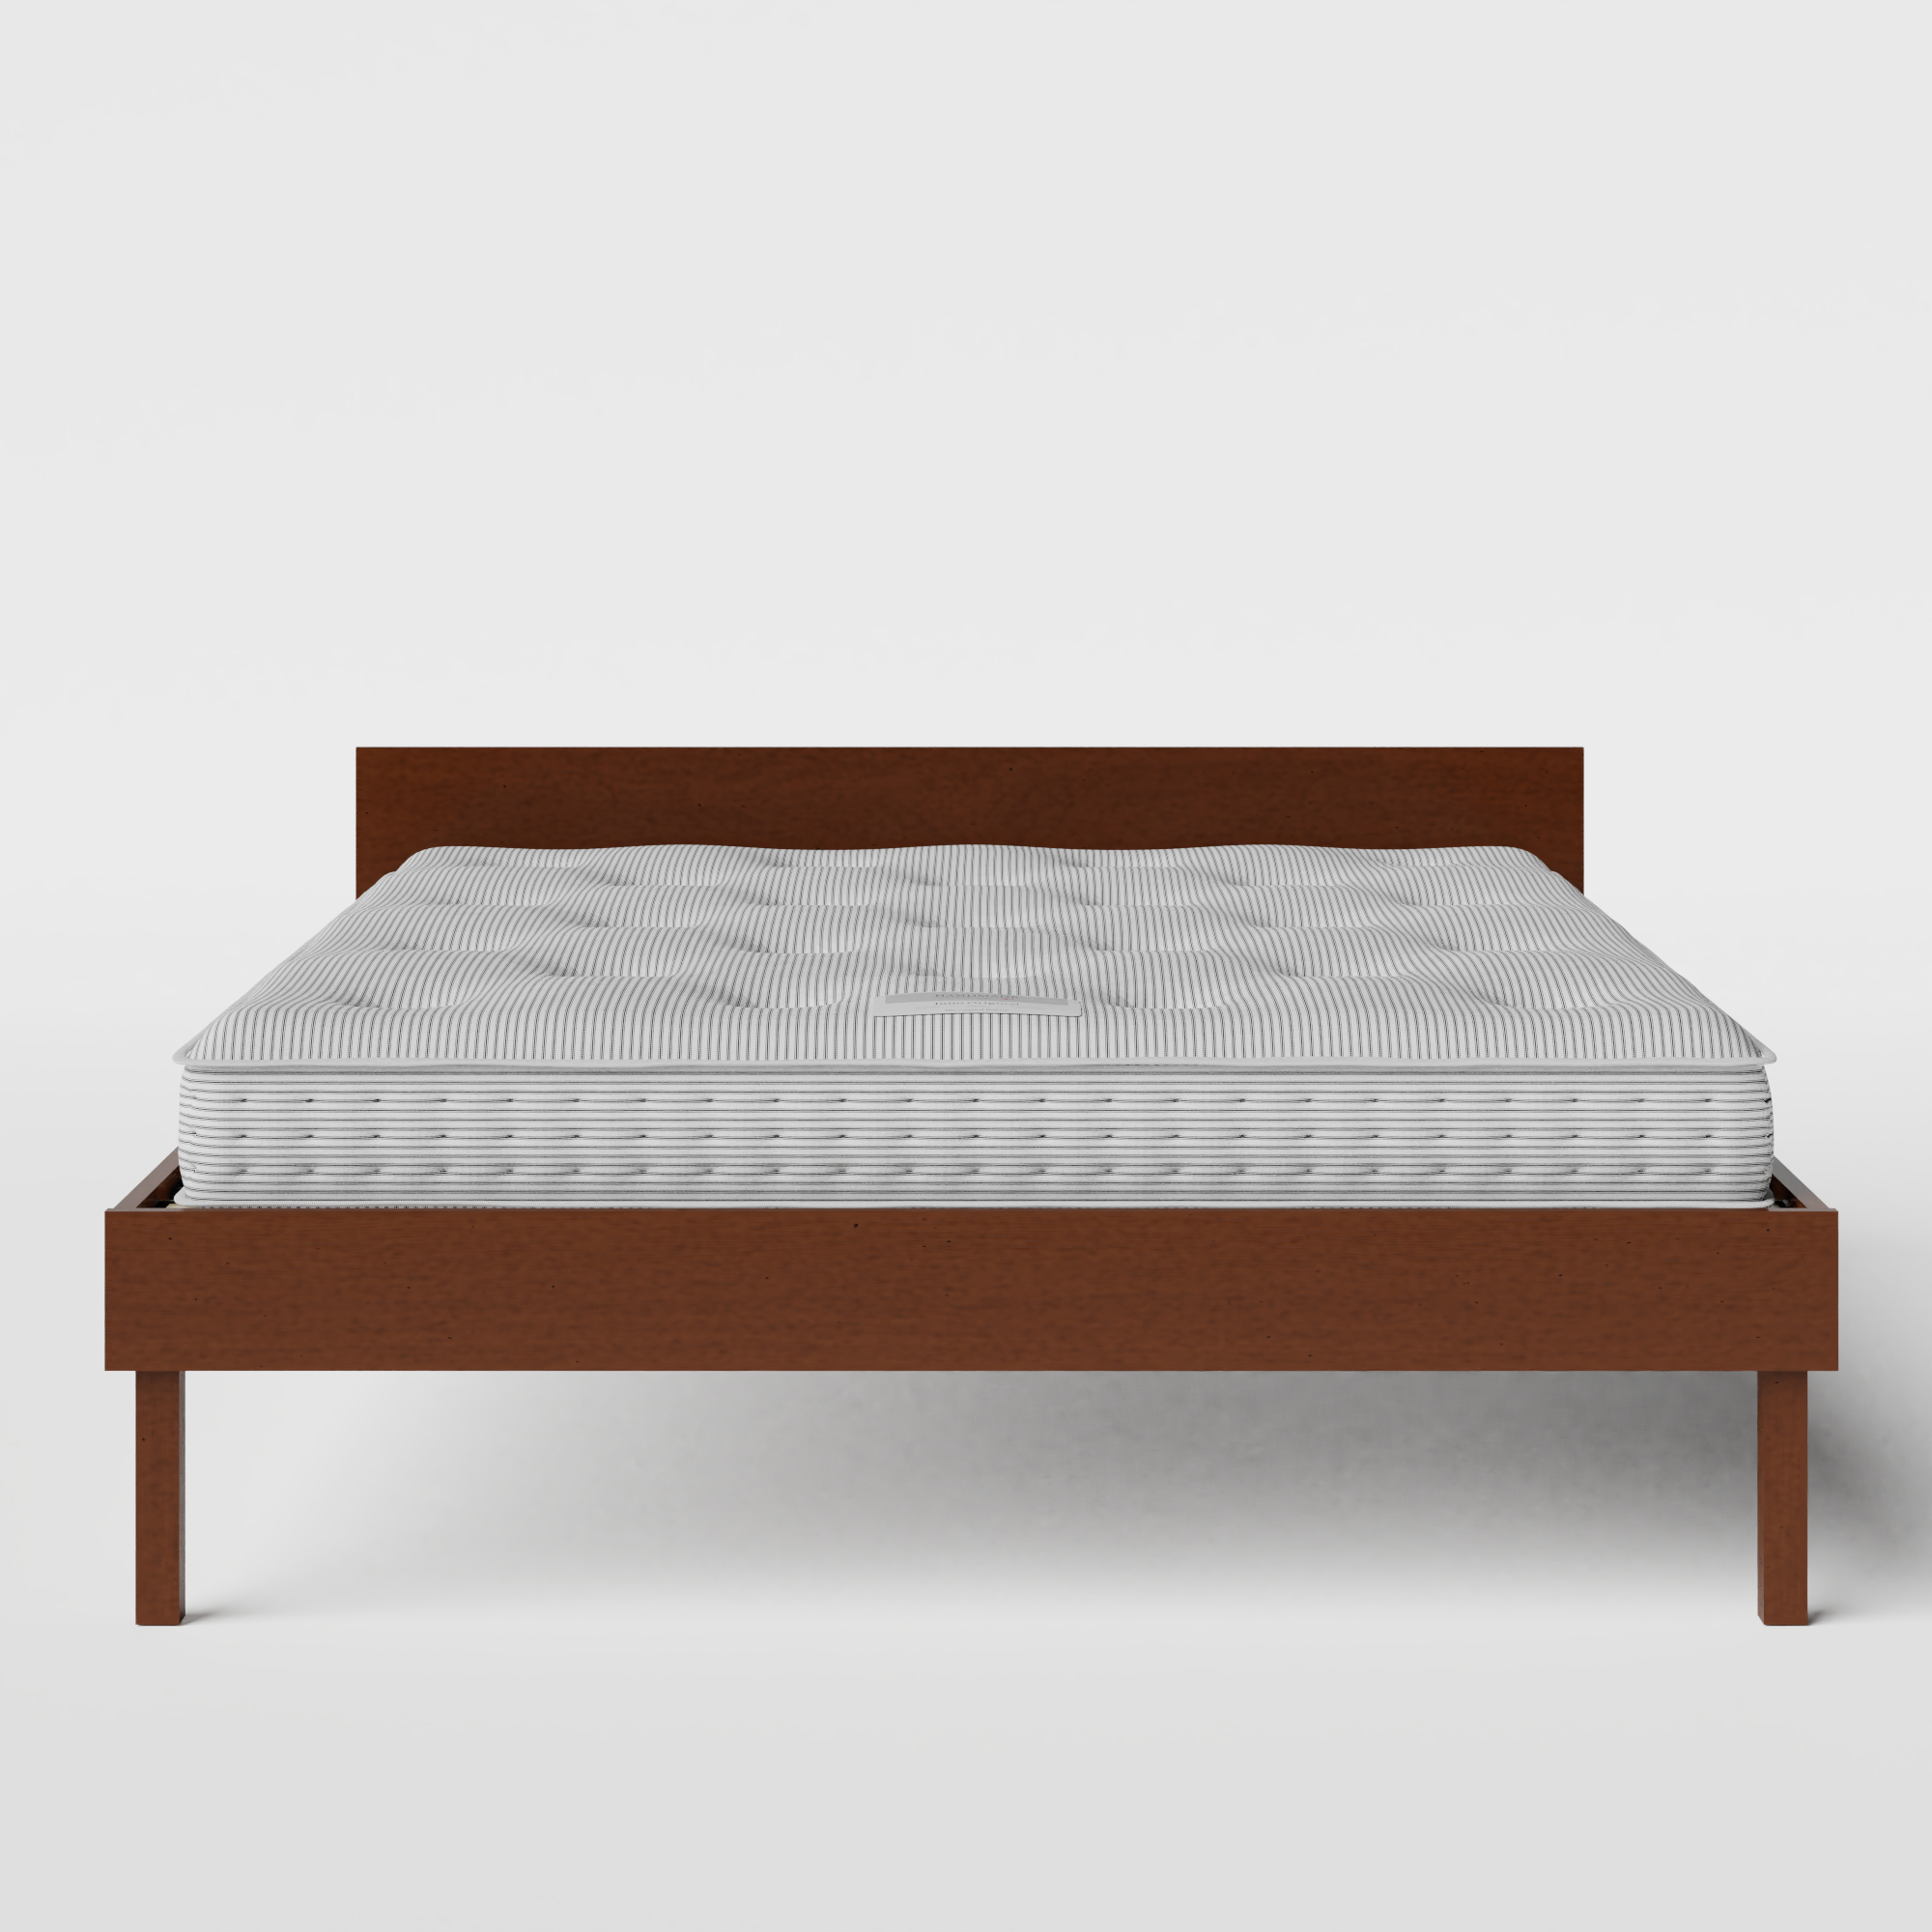 Fuji wood bed in dark cherry with Juno mattress